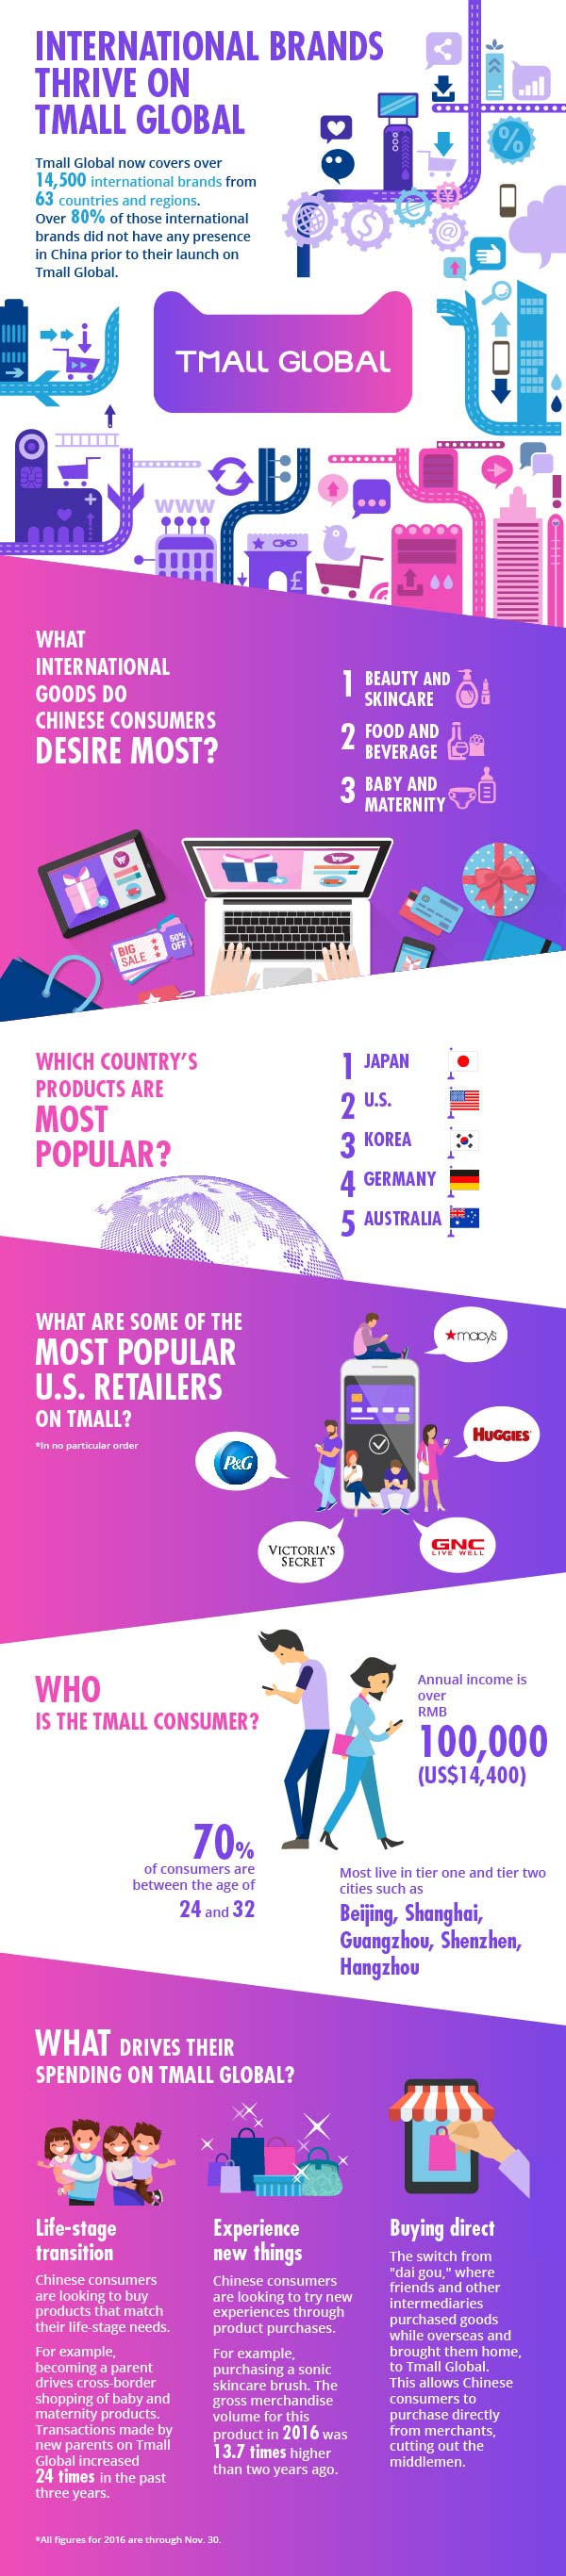 tmall-global-infographic-jan-2016